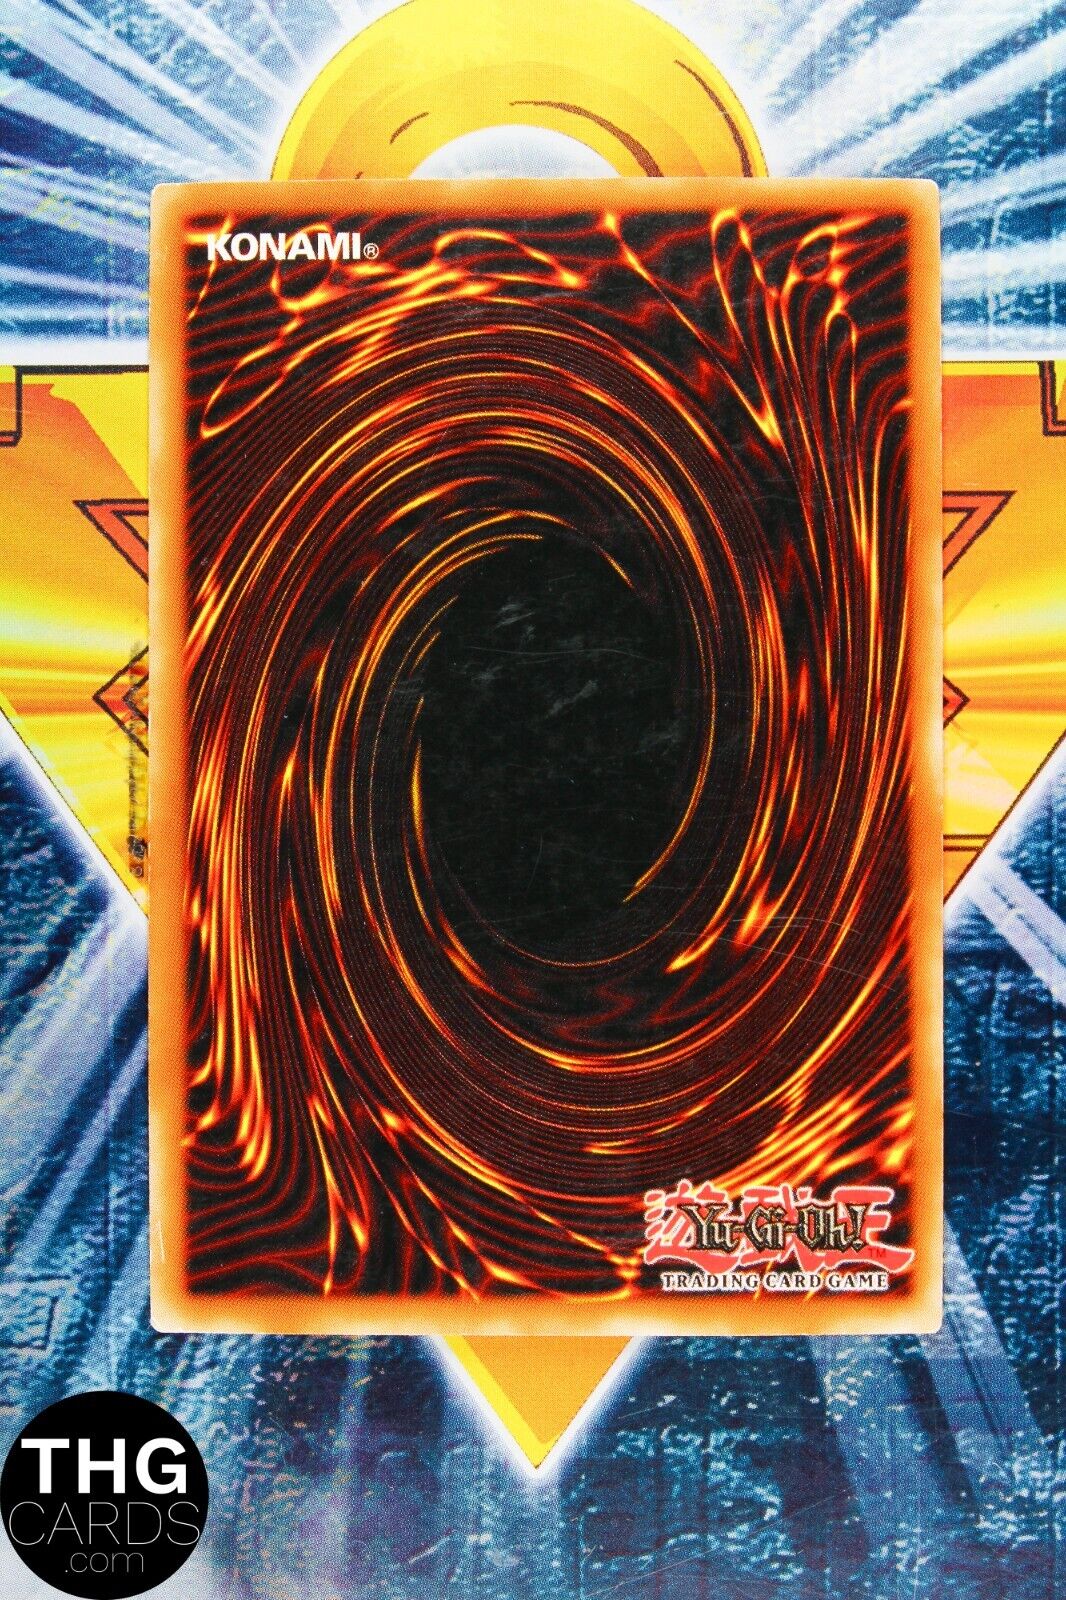 Shadow Spell SKE-041 Super Rare Yugioh Card 1